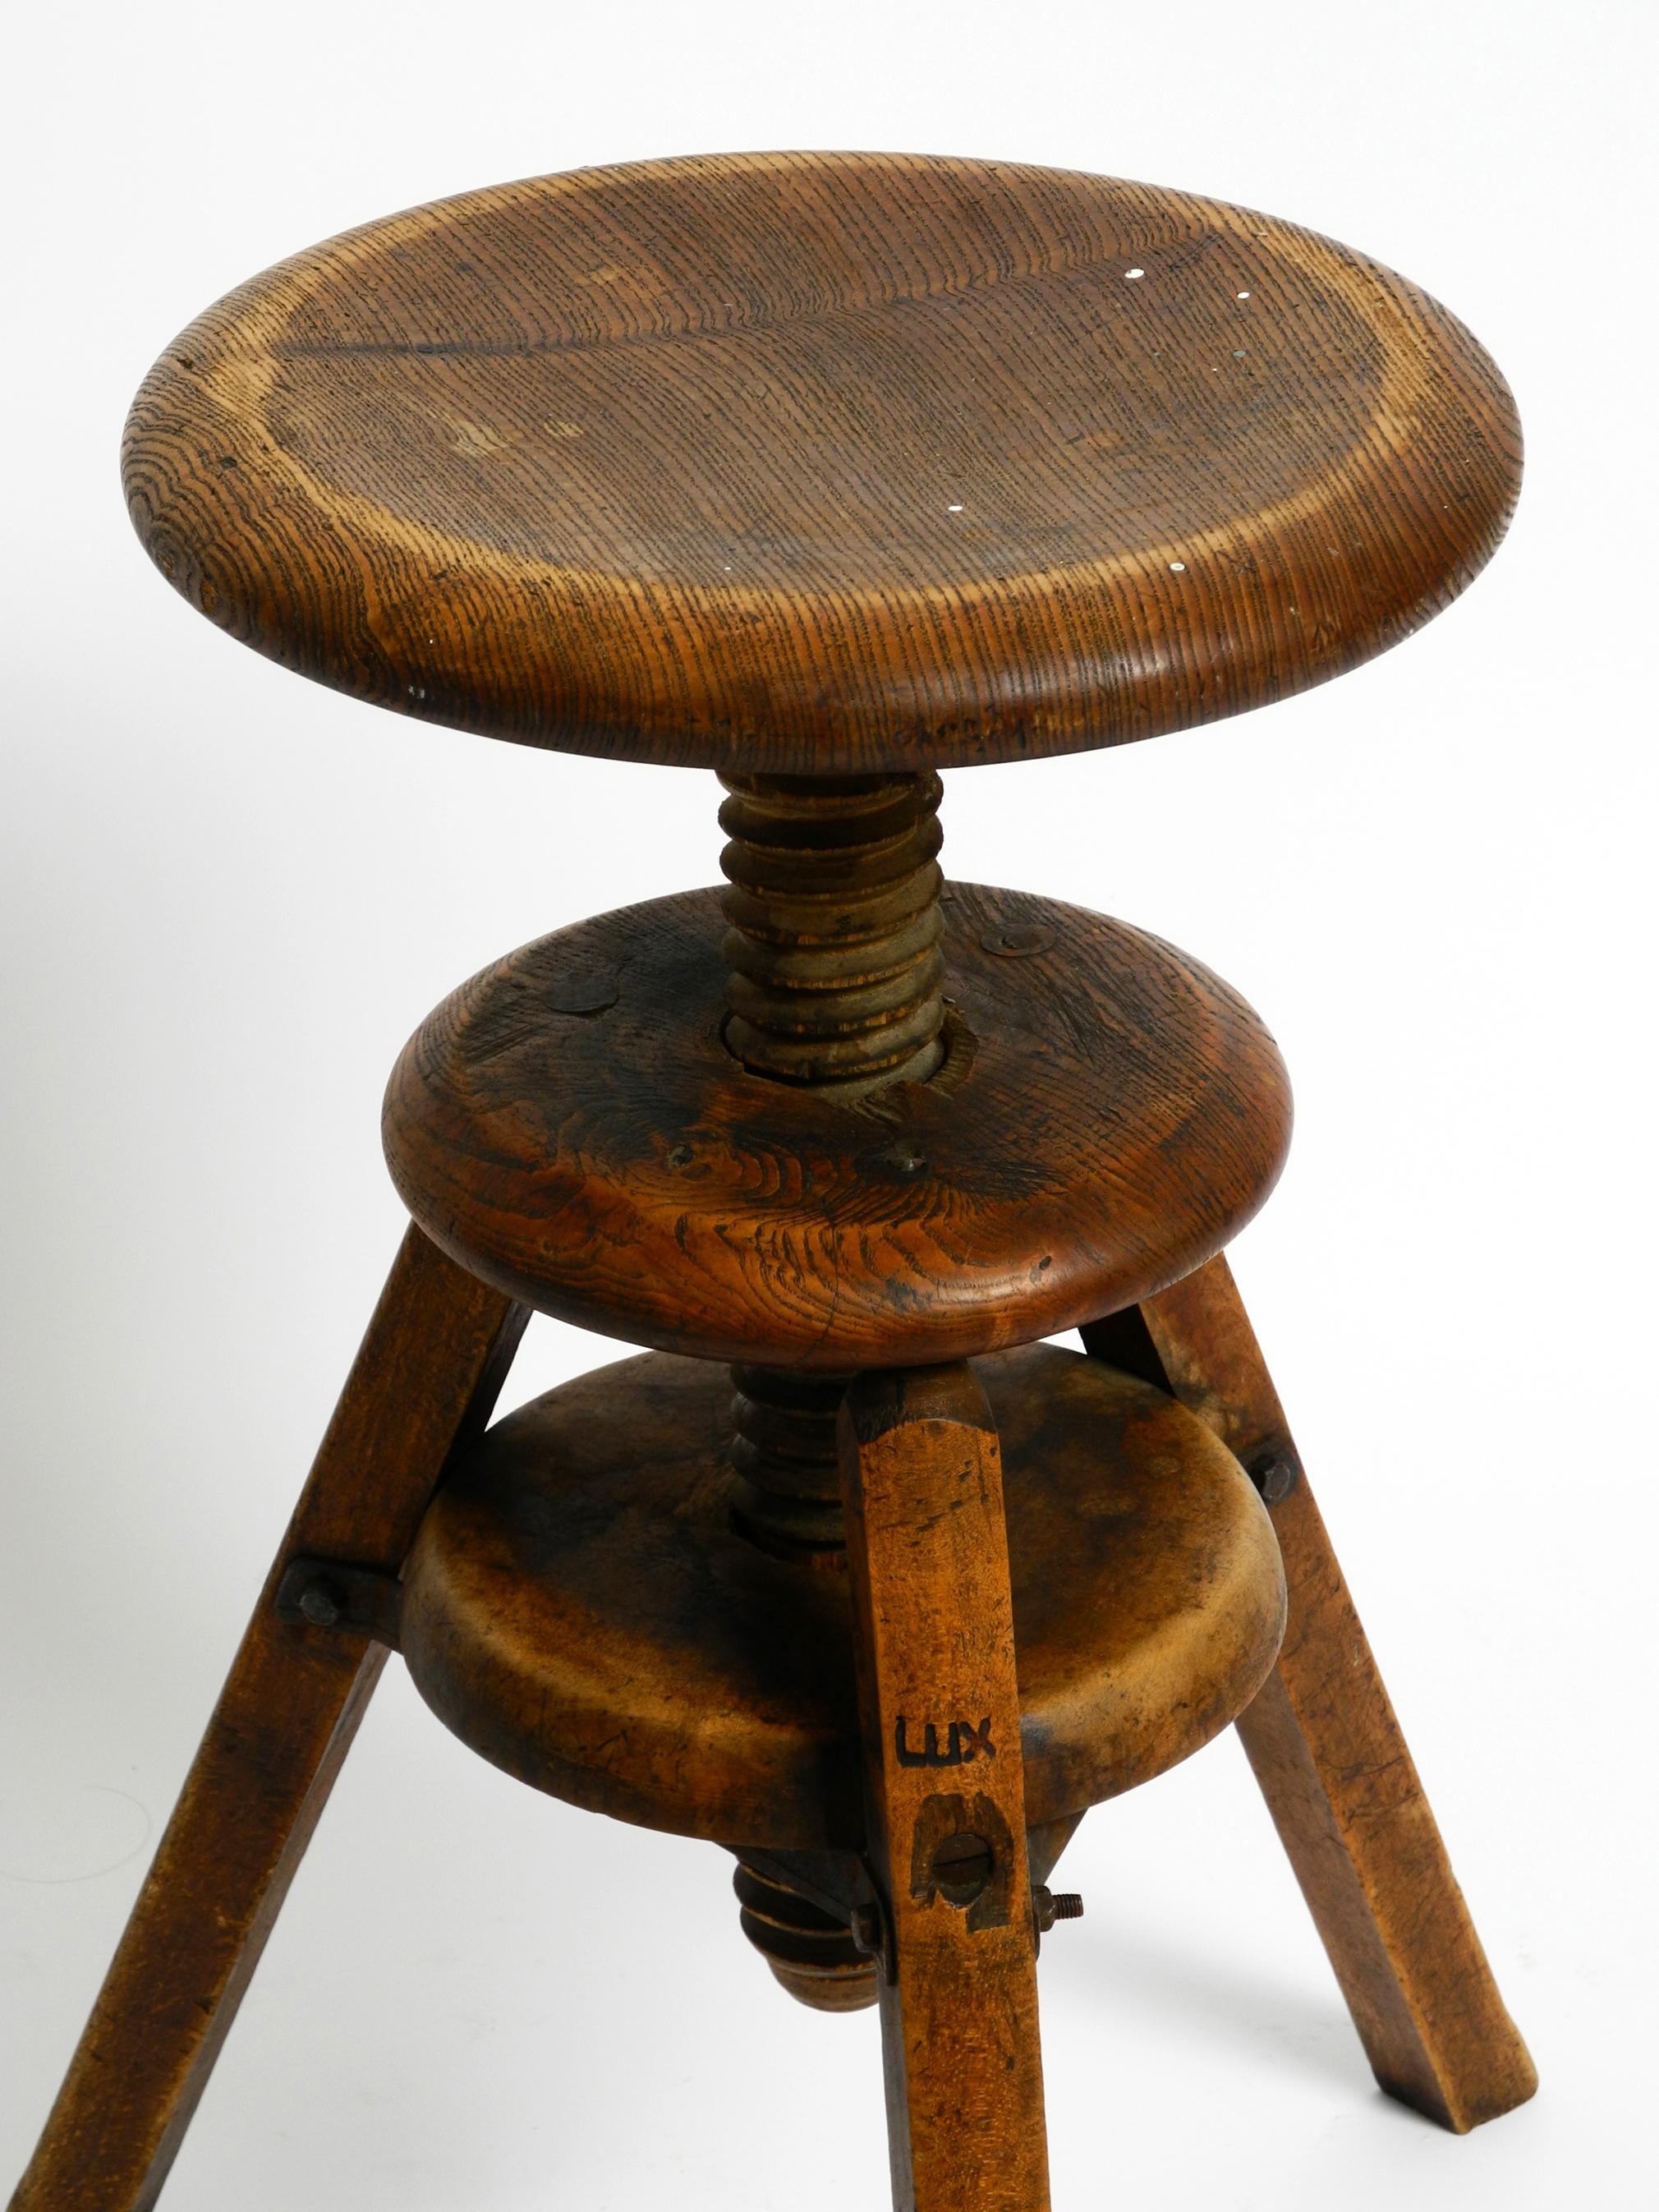 Metal Original 30s French industrial swivel stool made of heavy oak